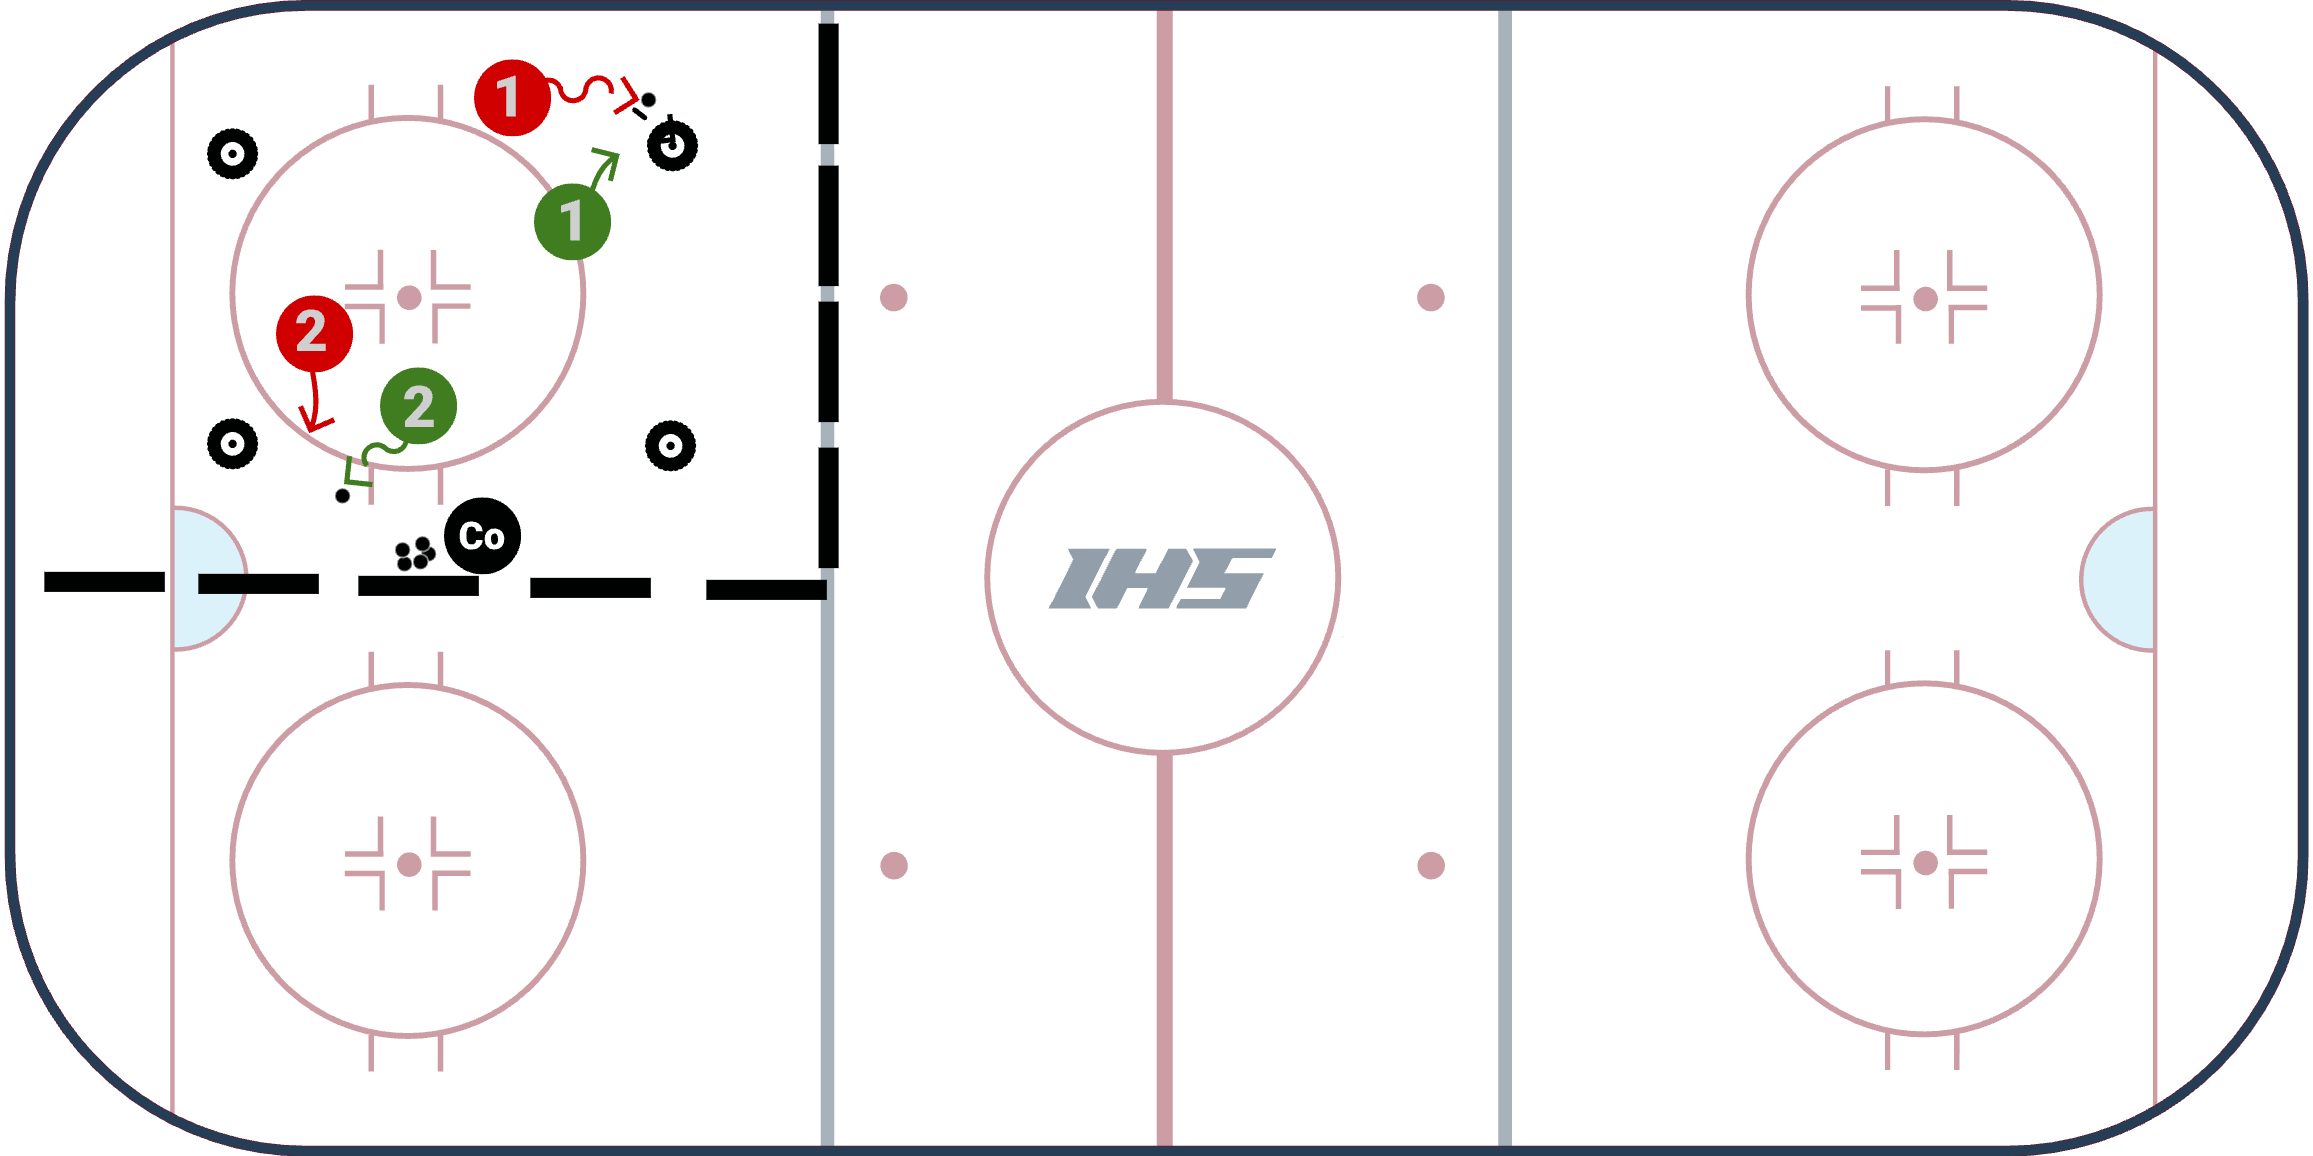 Corner Tires 1 vs 1 Multiple Games 1/6 Ice Station diagram